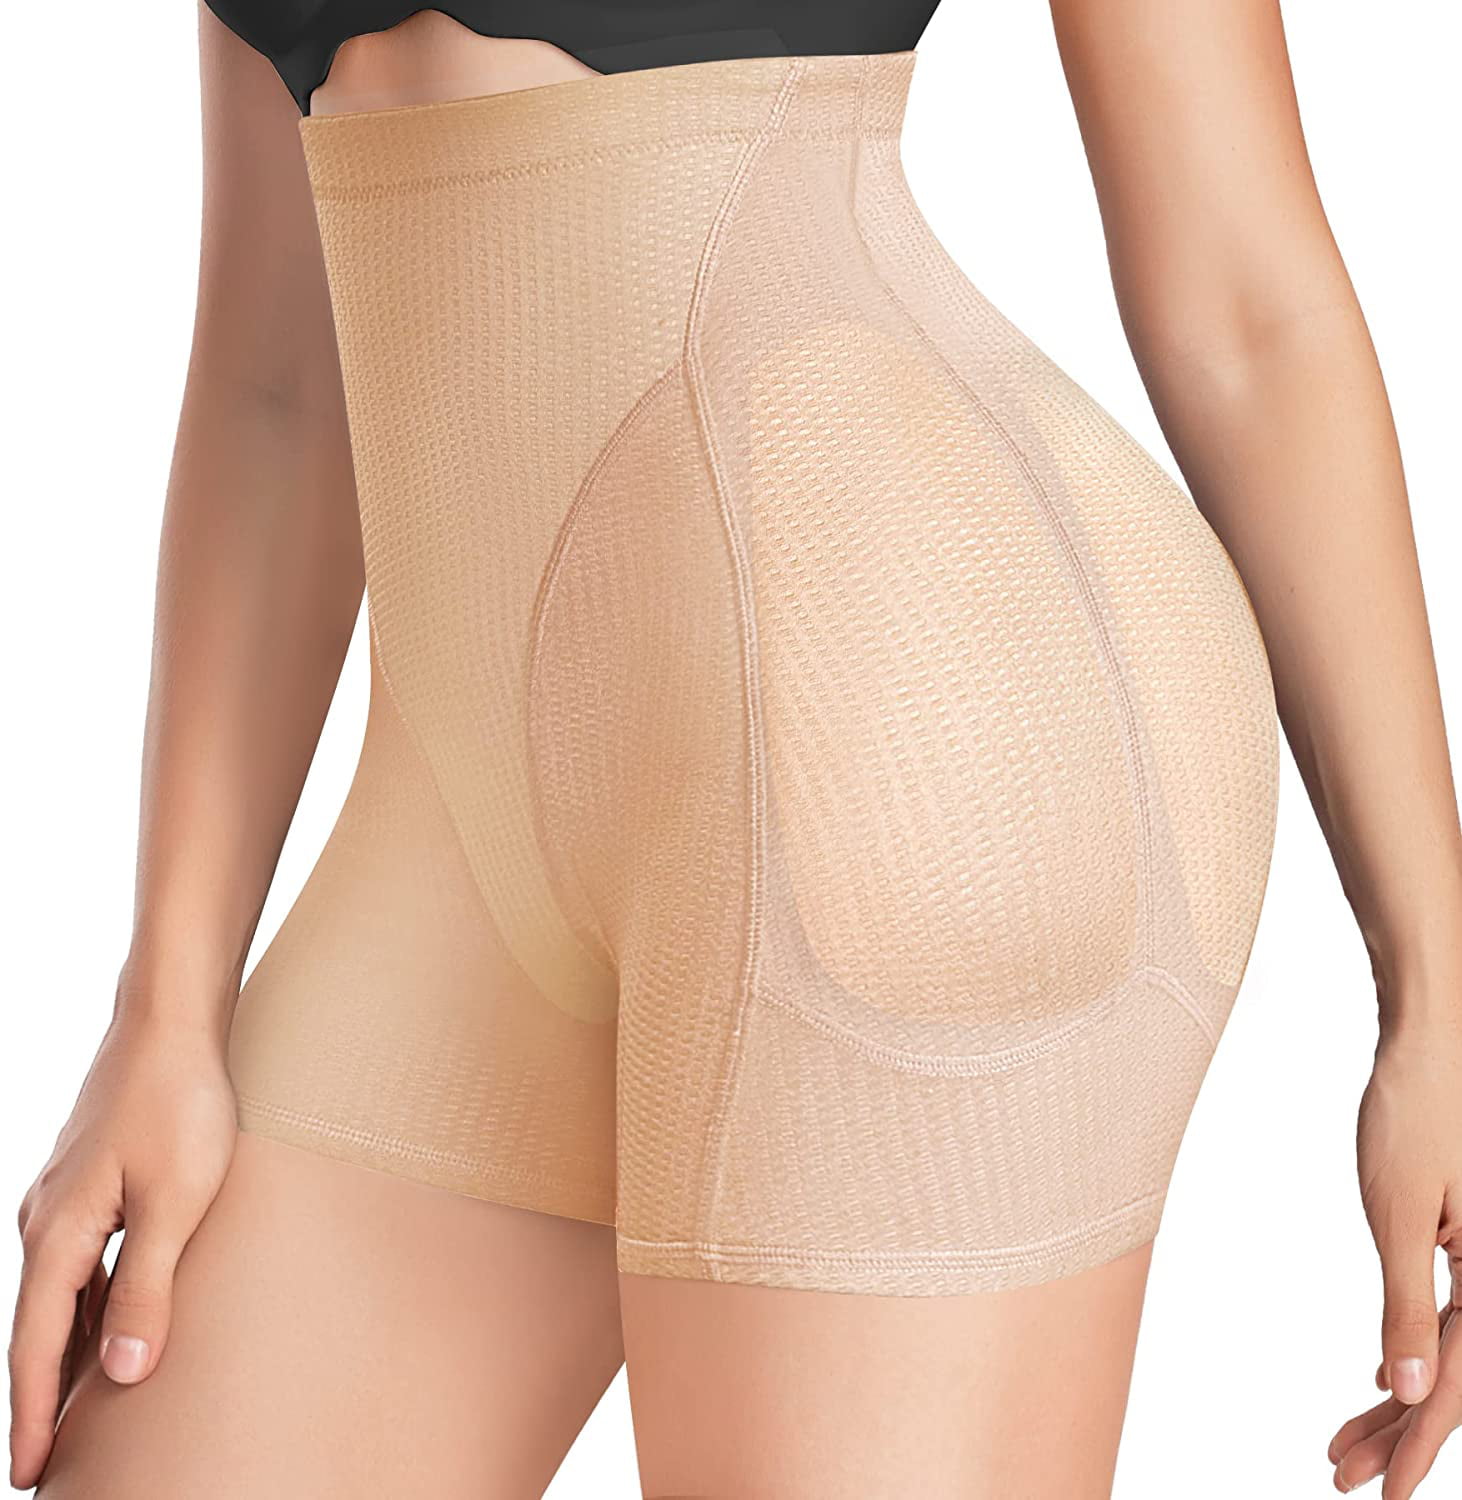 Women's Seamless Body Control Panties Shaper Butt Lift Slip Shorts Underwear US